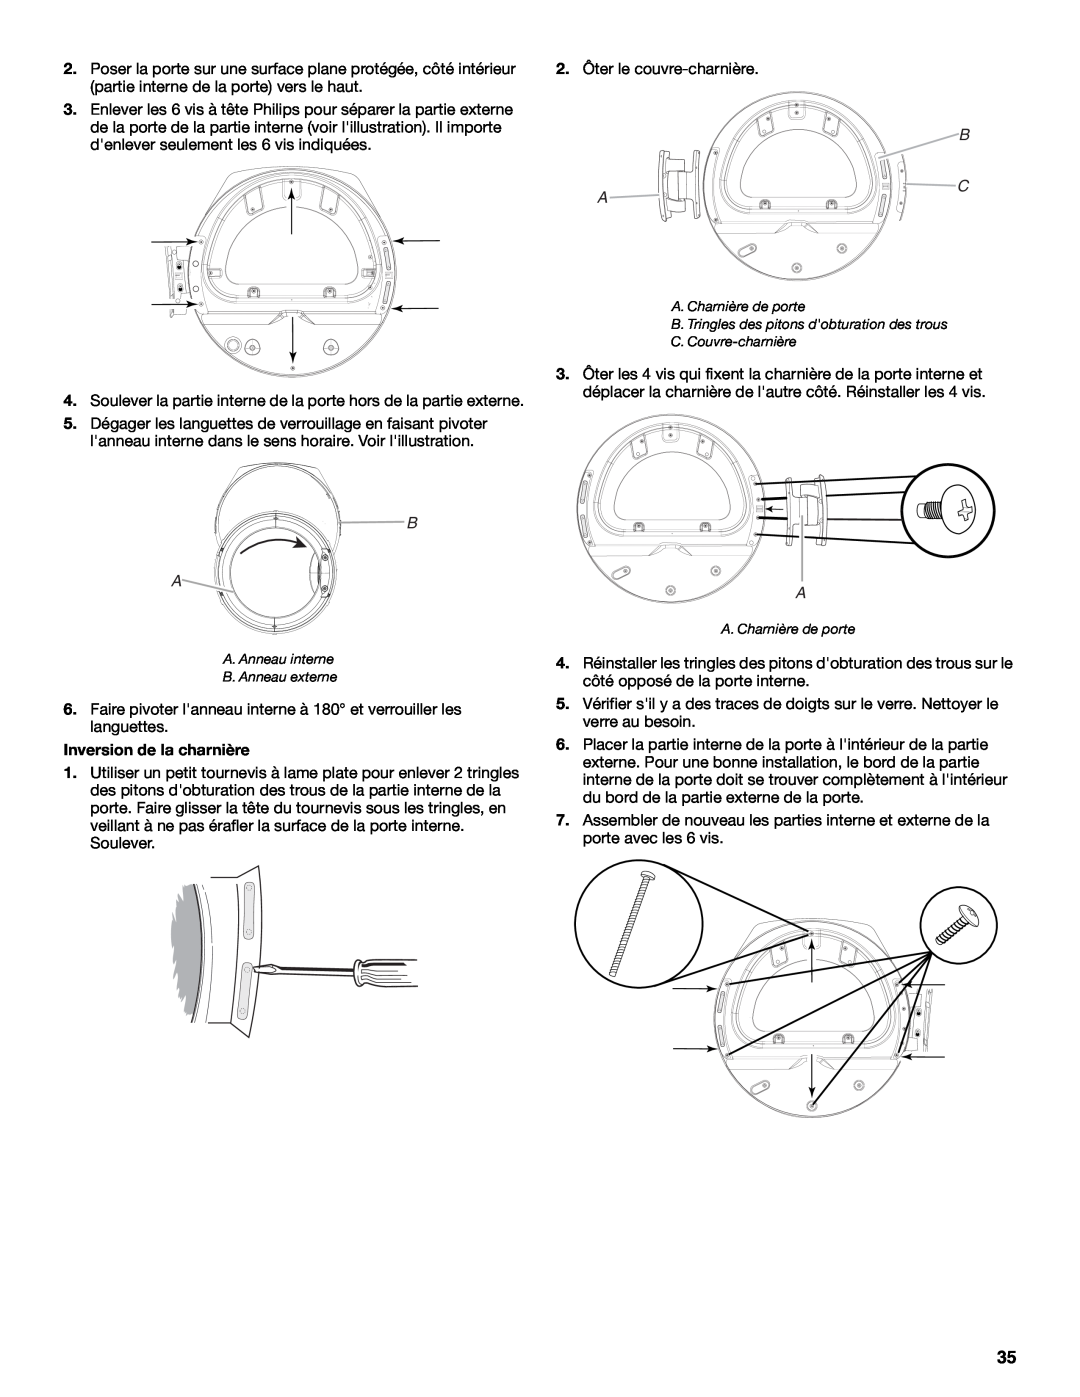 Whirlpool DUET SPORT, W10057260 manual Inversion de la charnière 